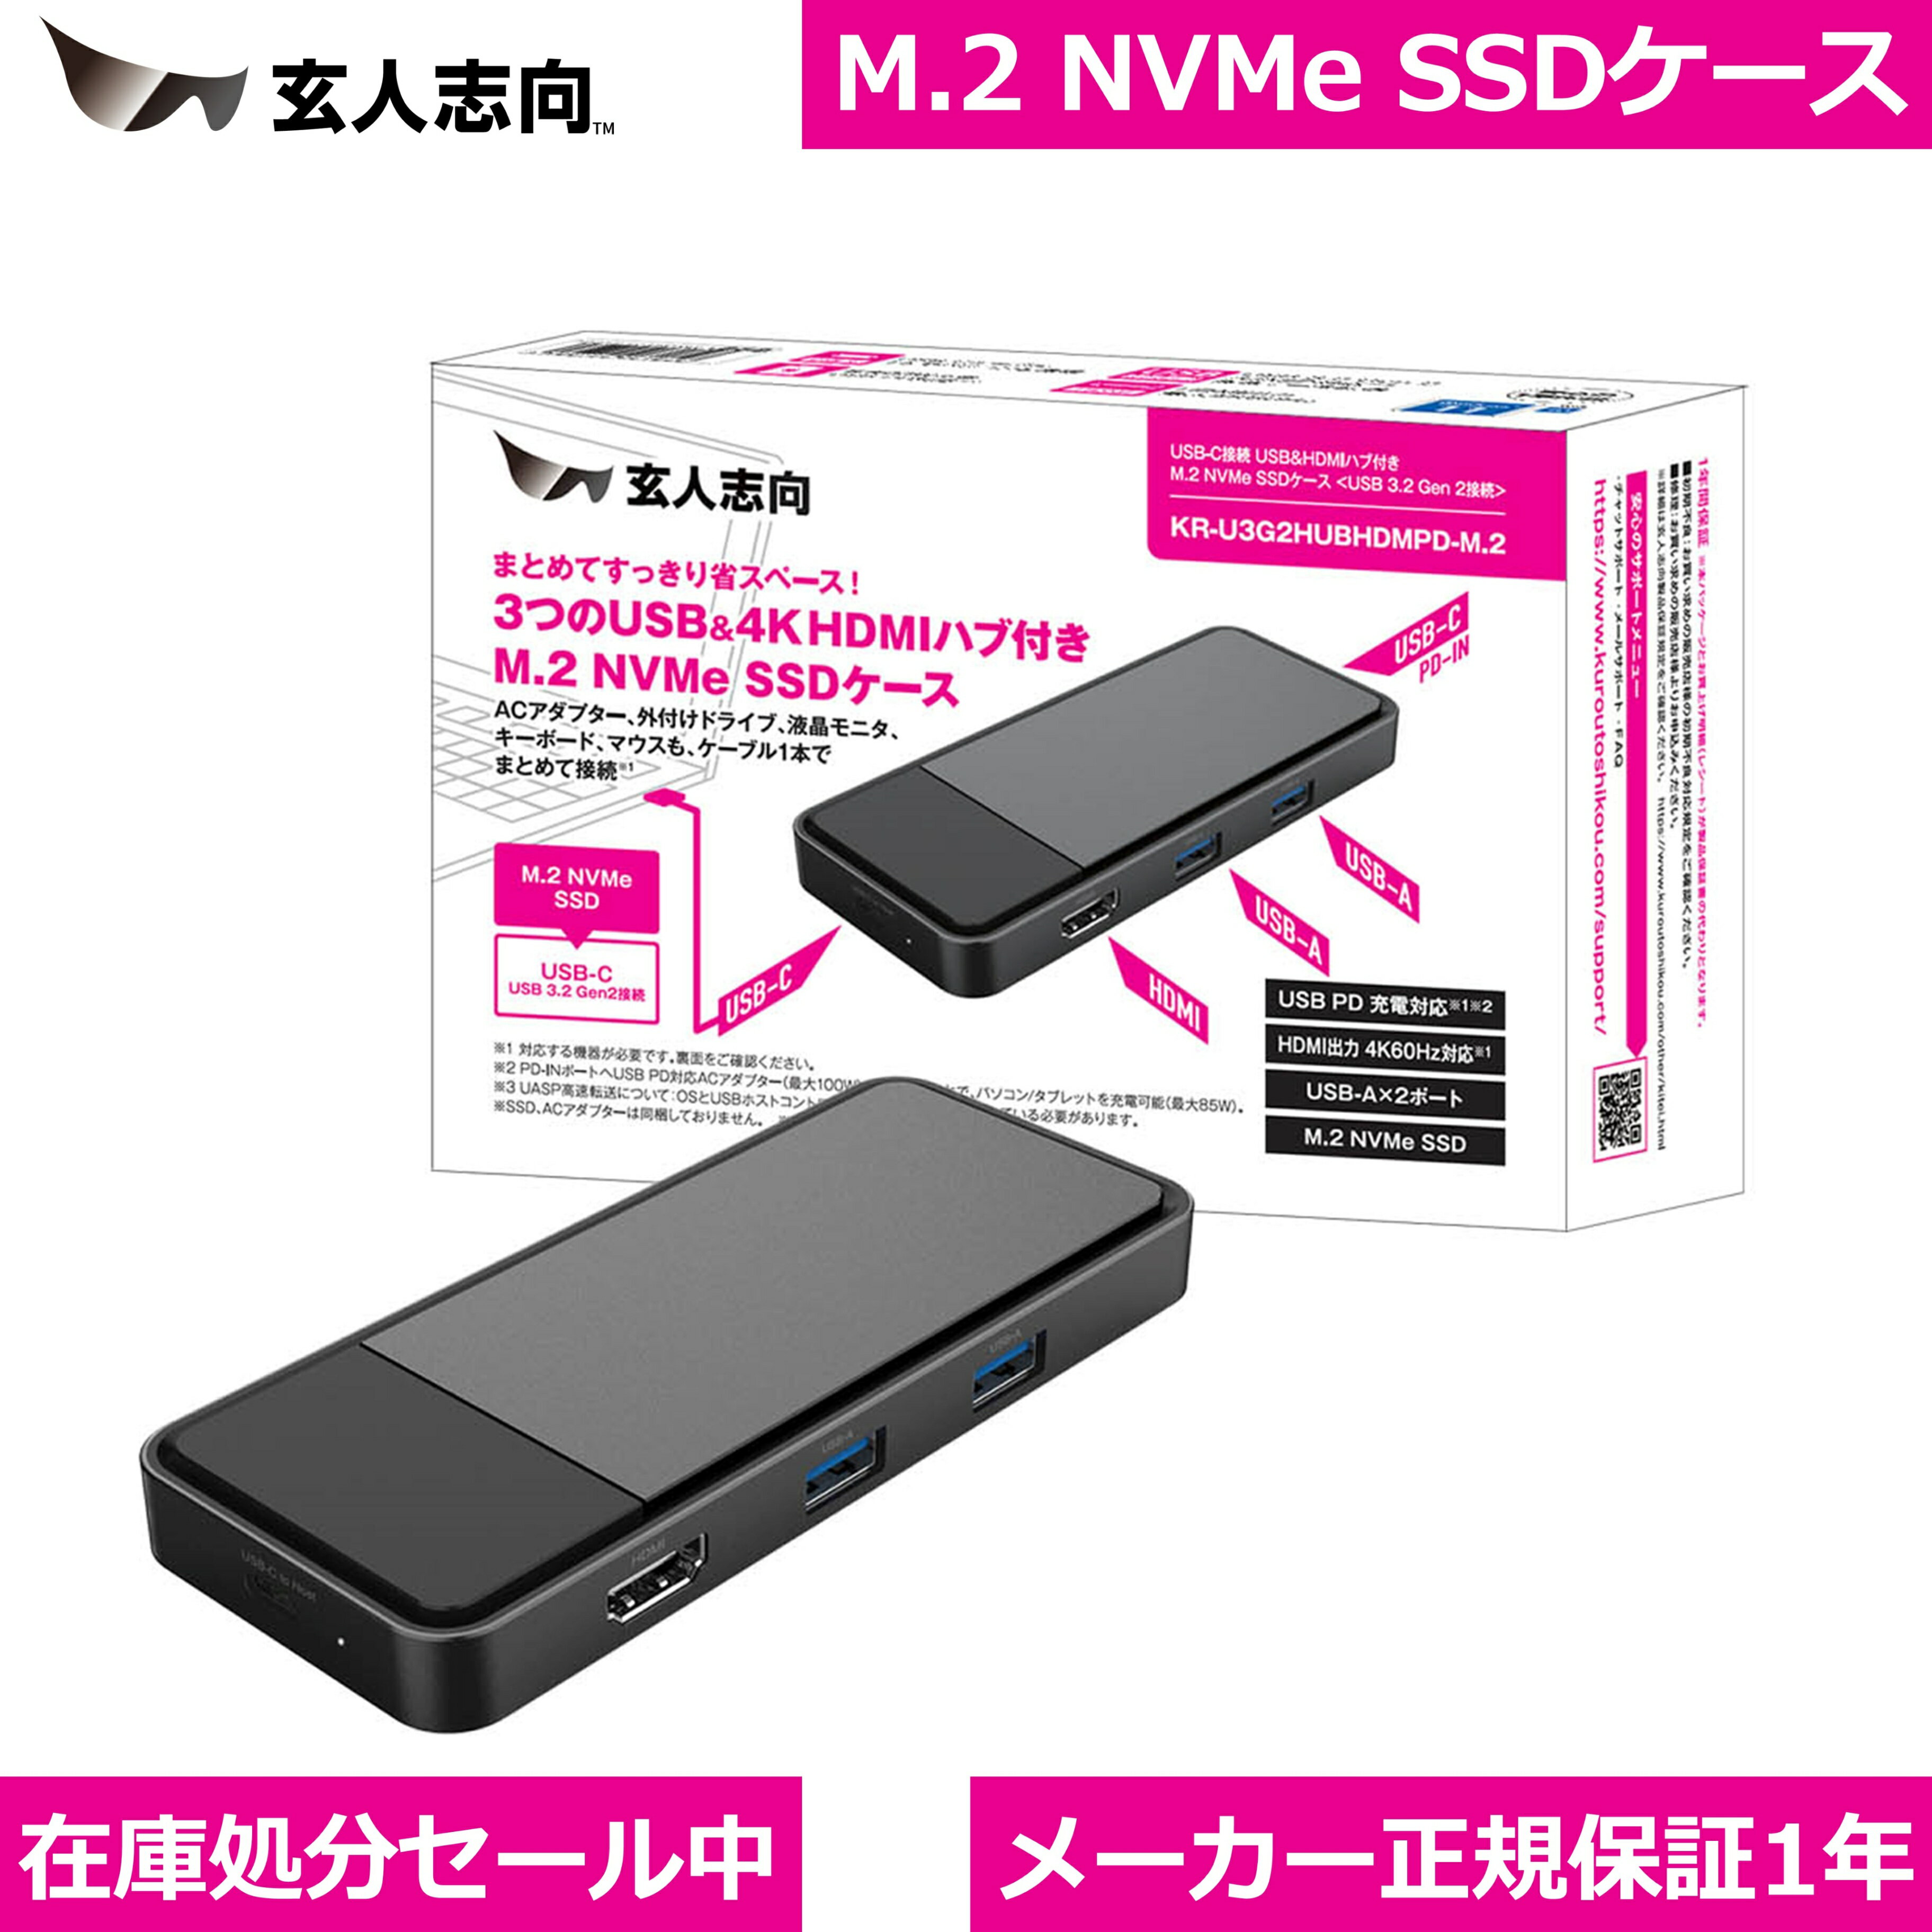 lu 3USB4K HDMInut USB3.2 Gen2 ڑ M.2 NVMe SSDP[X KR-U3G2HUBHDMPD-M.2 ylu̔Xz